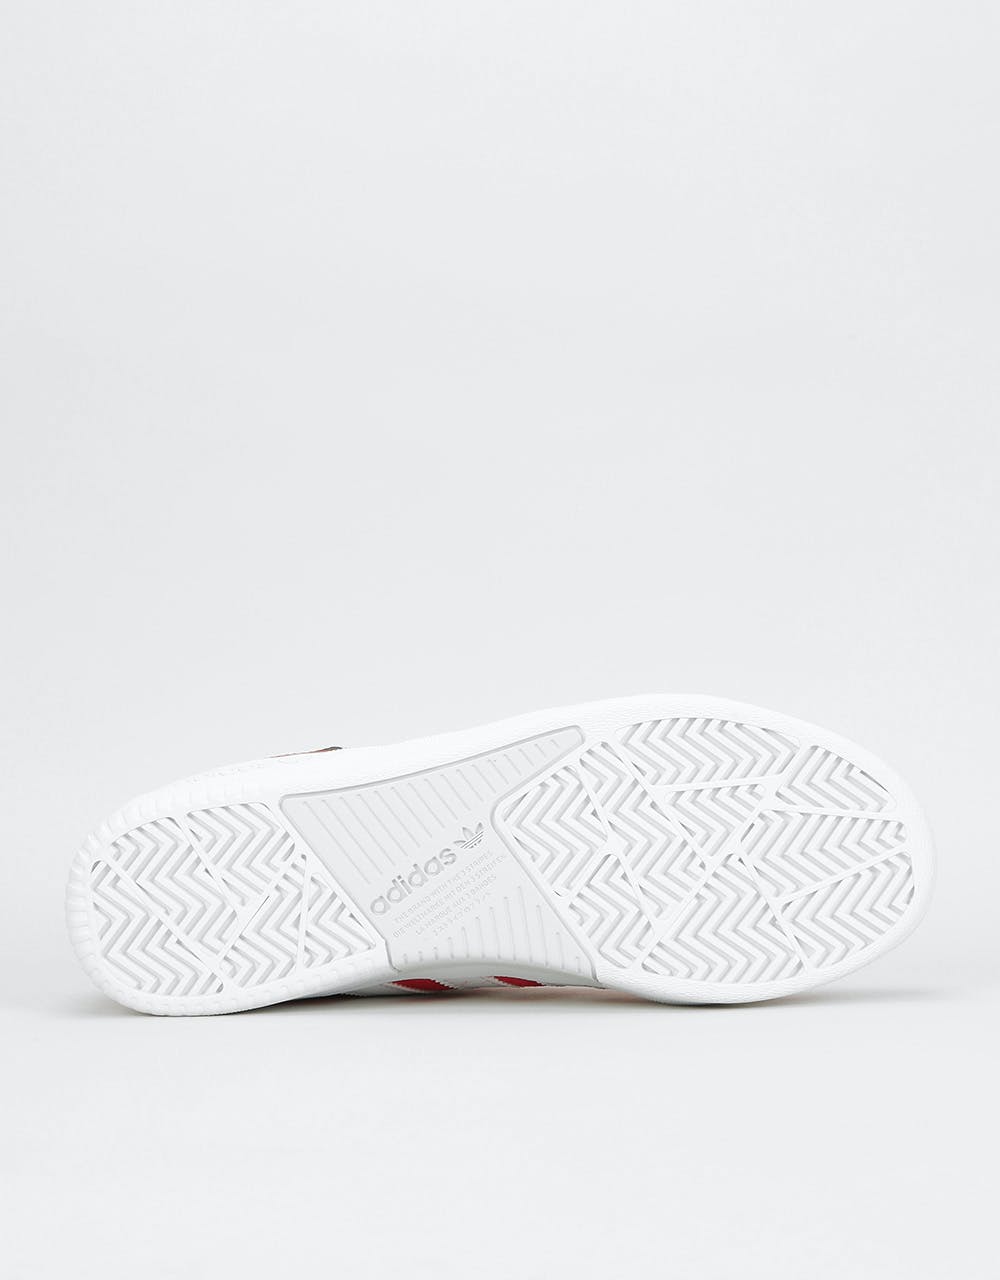 Adidas Tyshawn Skate Shoes - Scarlet/White/Core Black